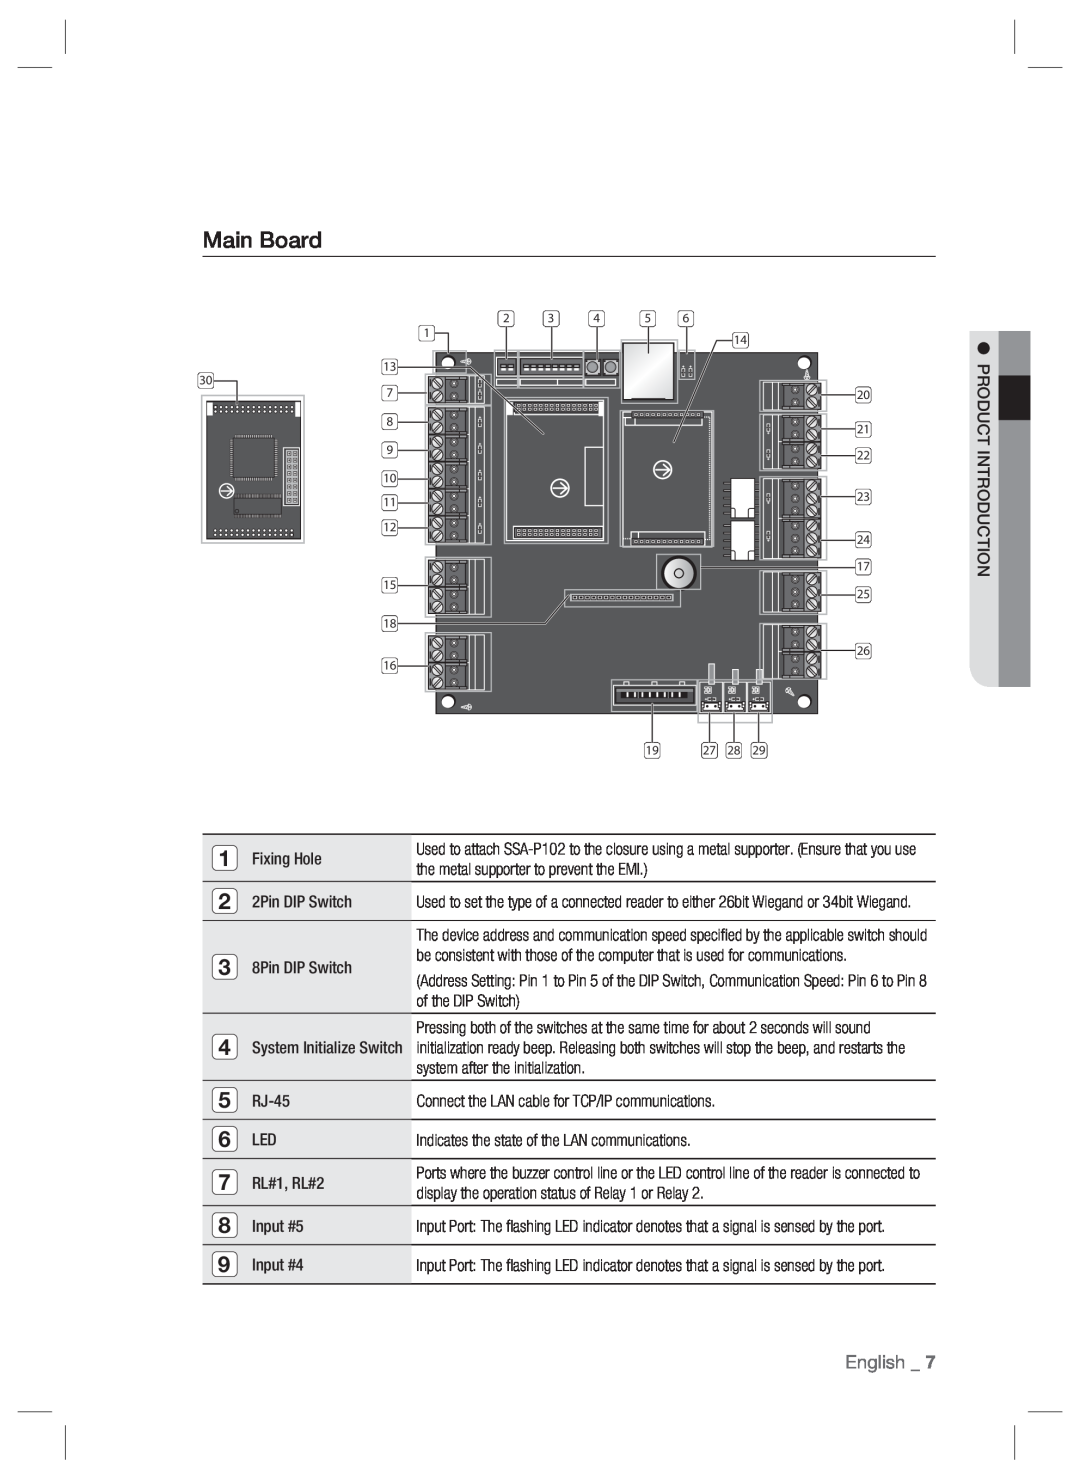 Samsung SSA-P102T user manual Main Board, English 